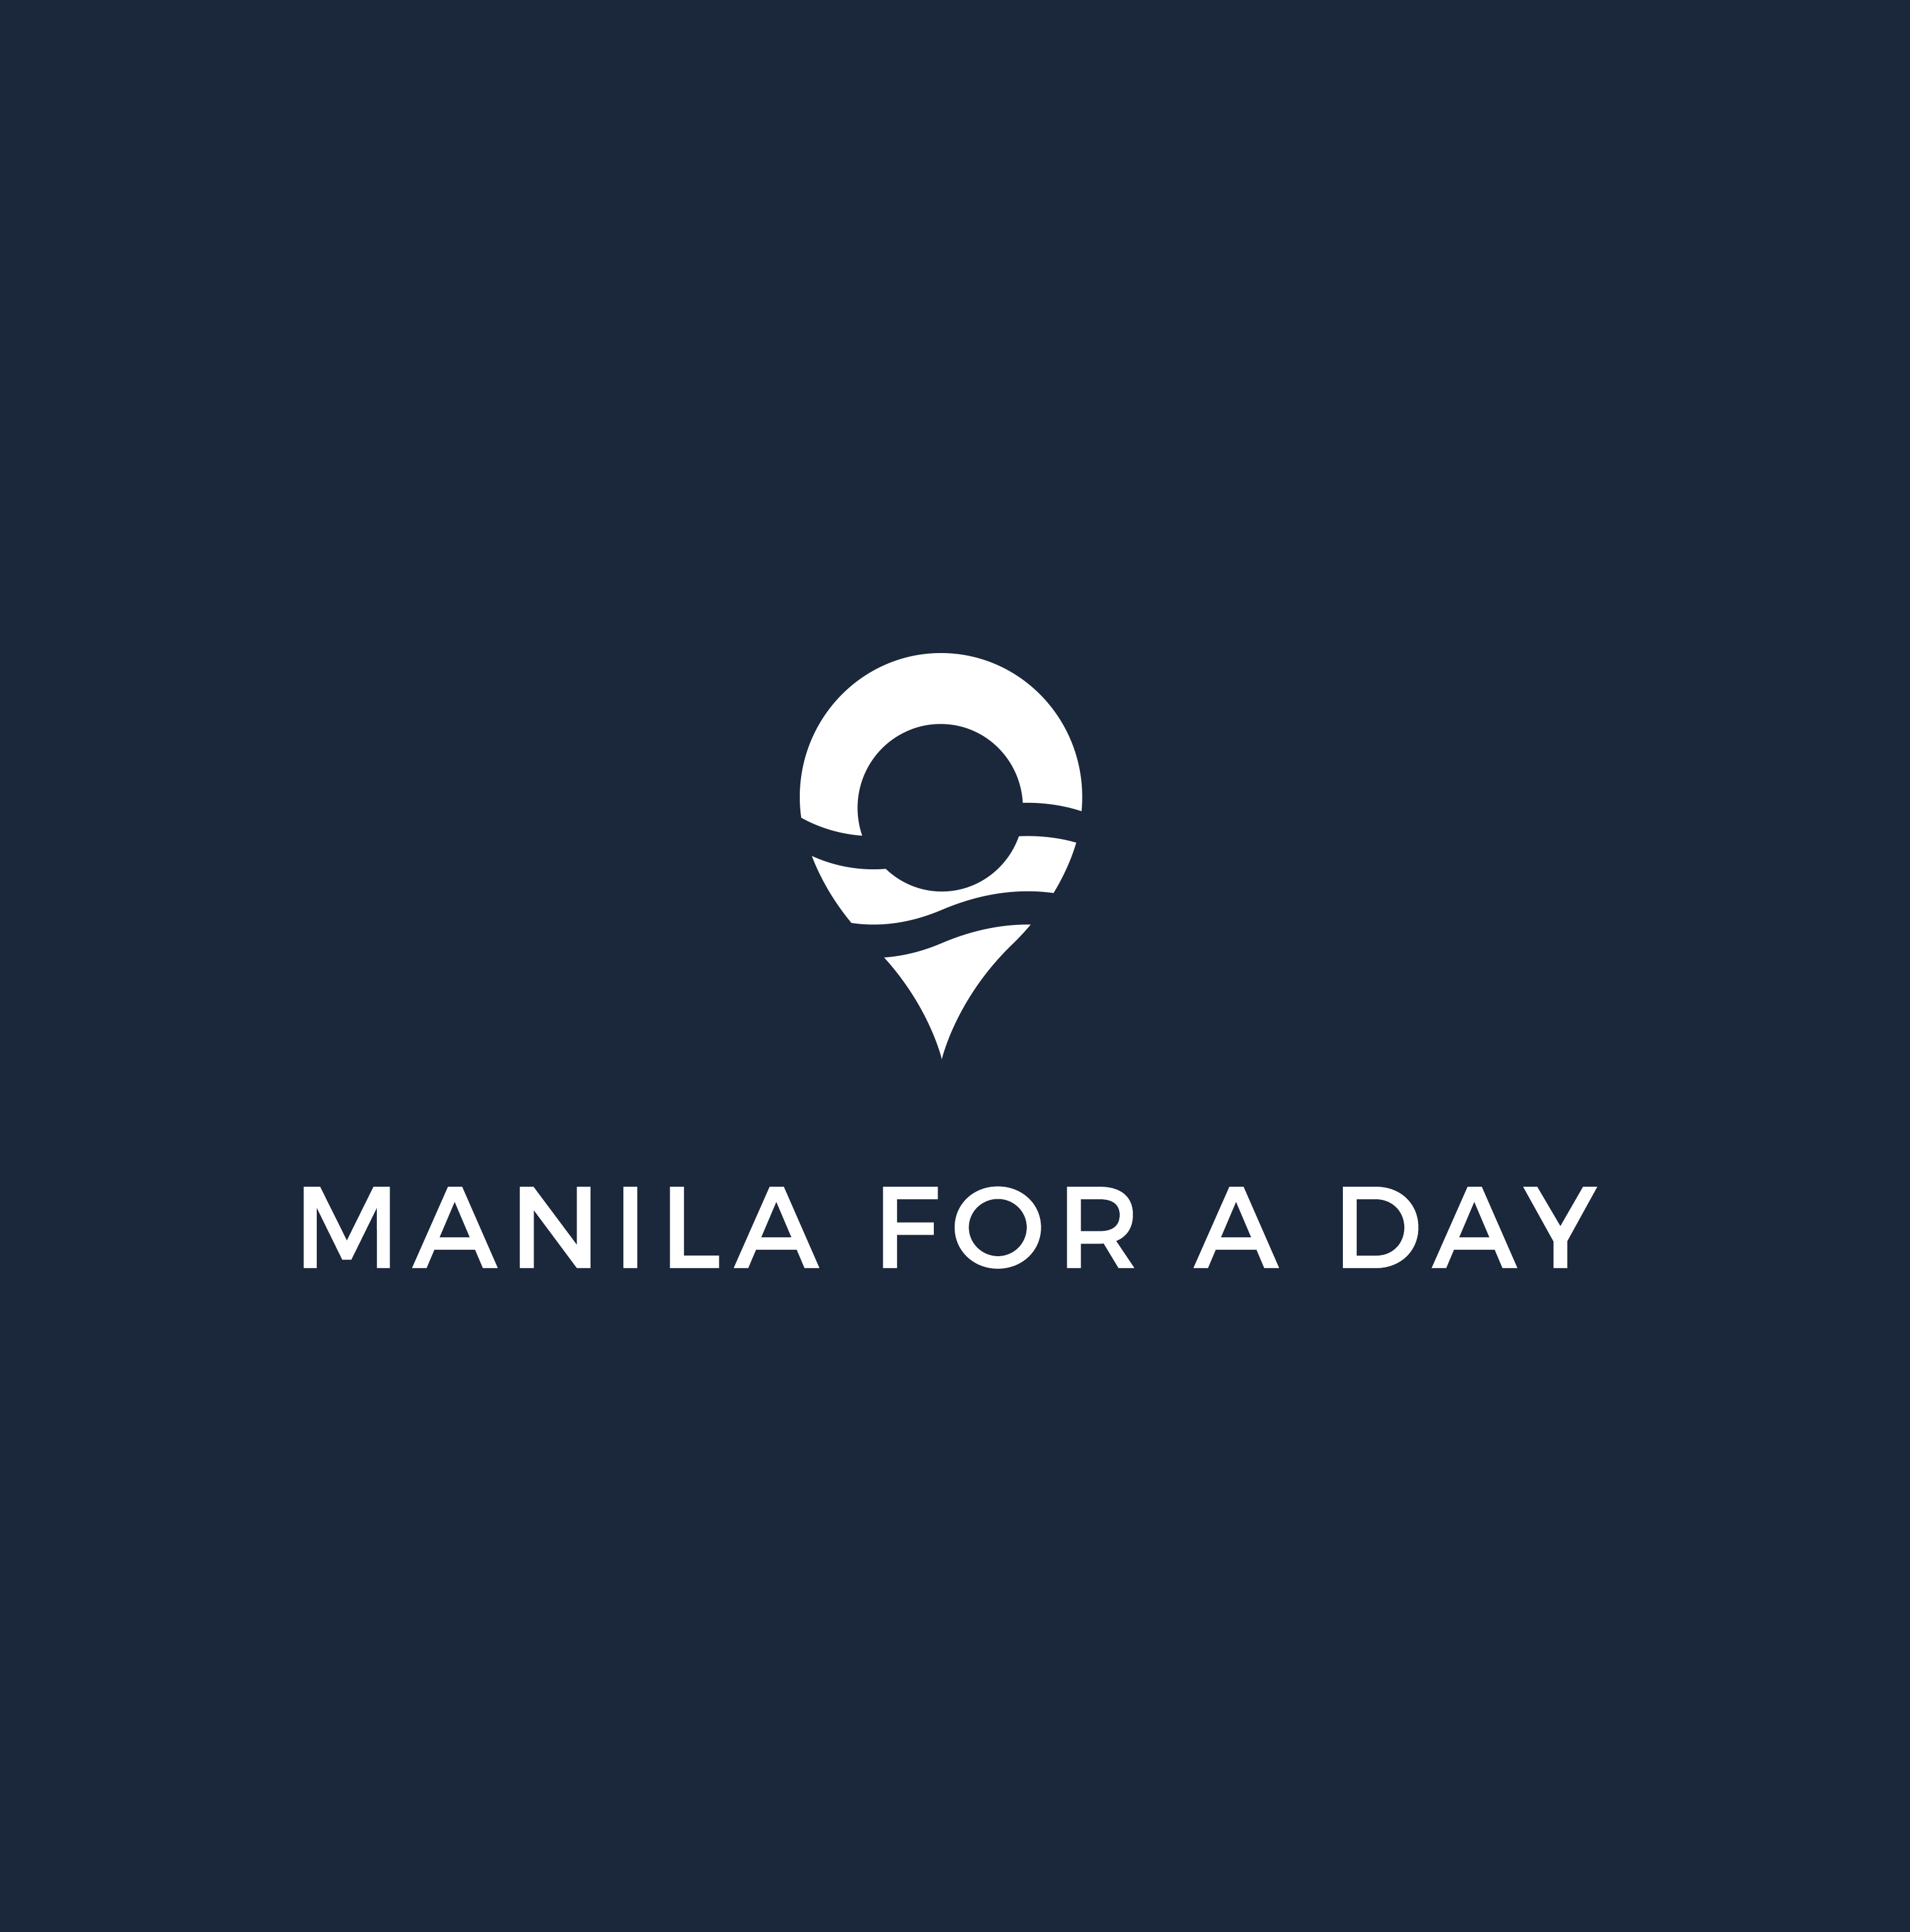 http://annaercilla.com/wp-content/uploads/2017/07/Manila-1.png